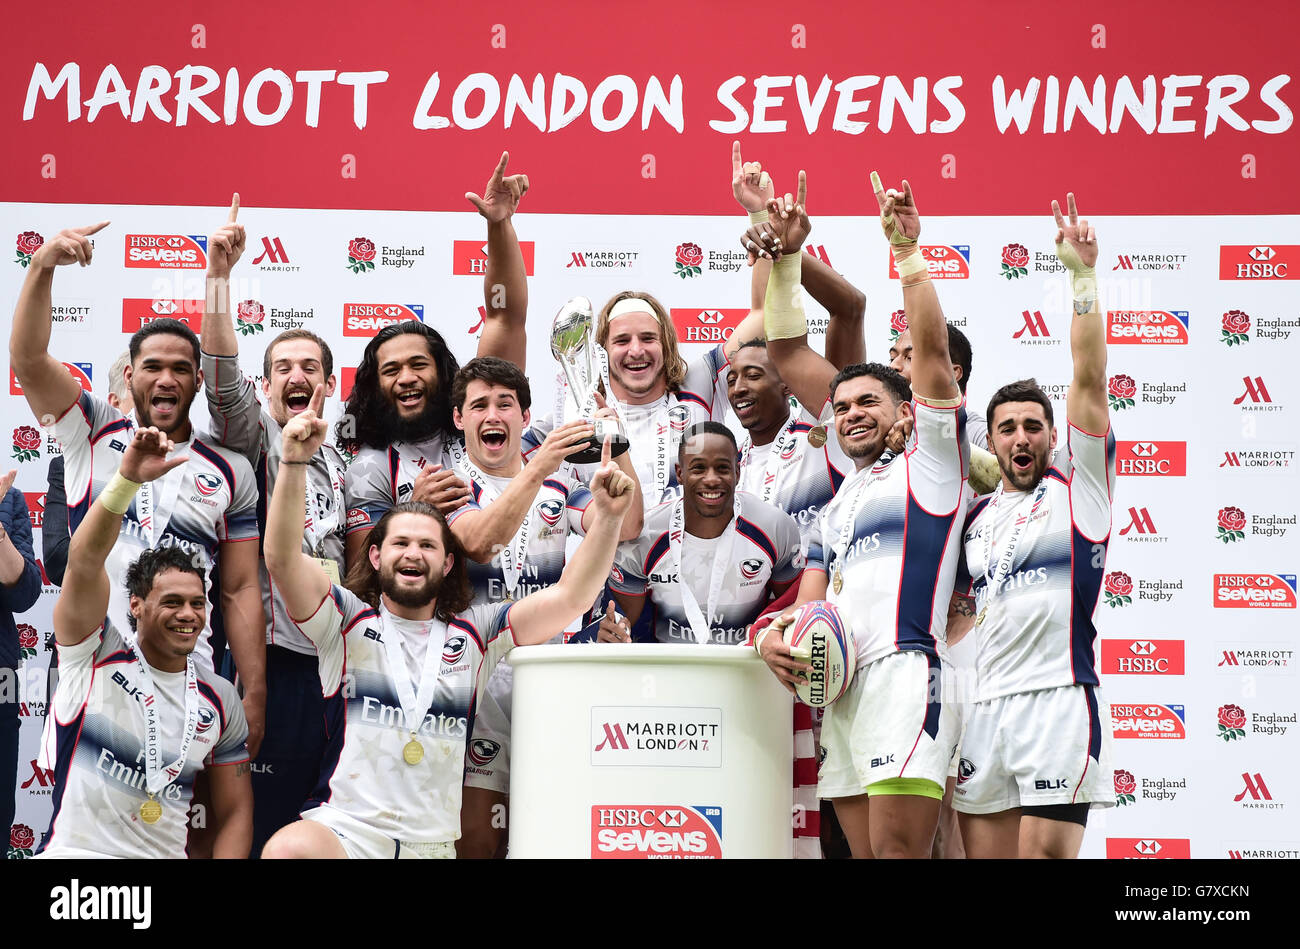 Rugby Union - Marriott London Sevens - Día Dos - Estadio Twickenham. Estados Unidos de América celebra ganar el Marriott London Sevens en el Twickenham Stadium de Londres. Foto de stock